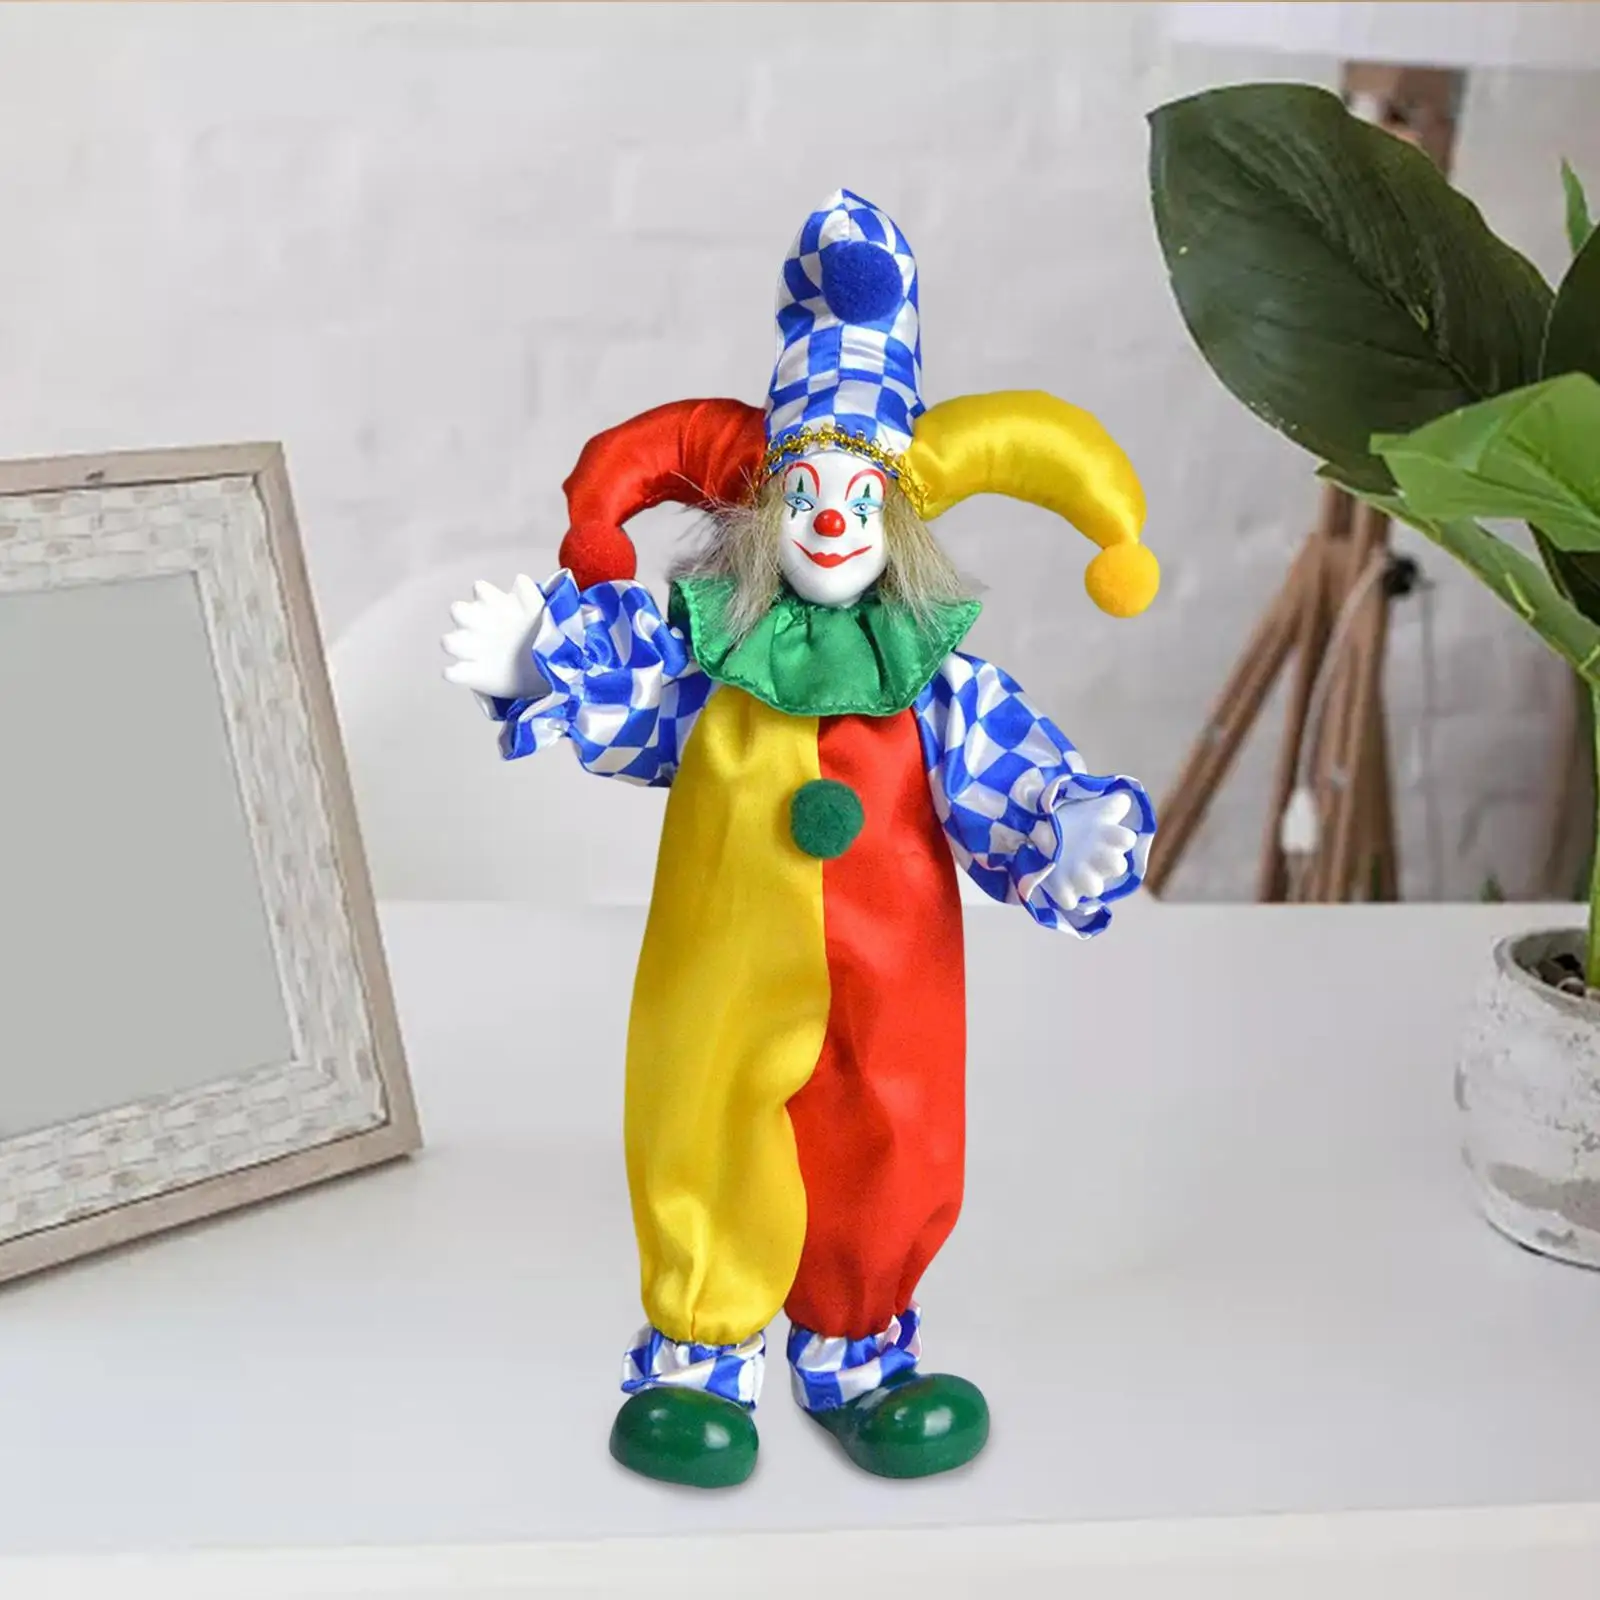 24cm Tall Clown Doll Figure for Halloween Decoration Ornaments